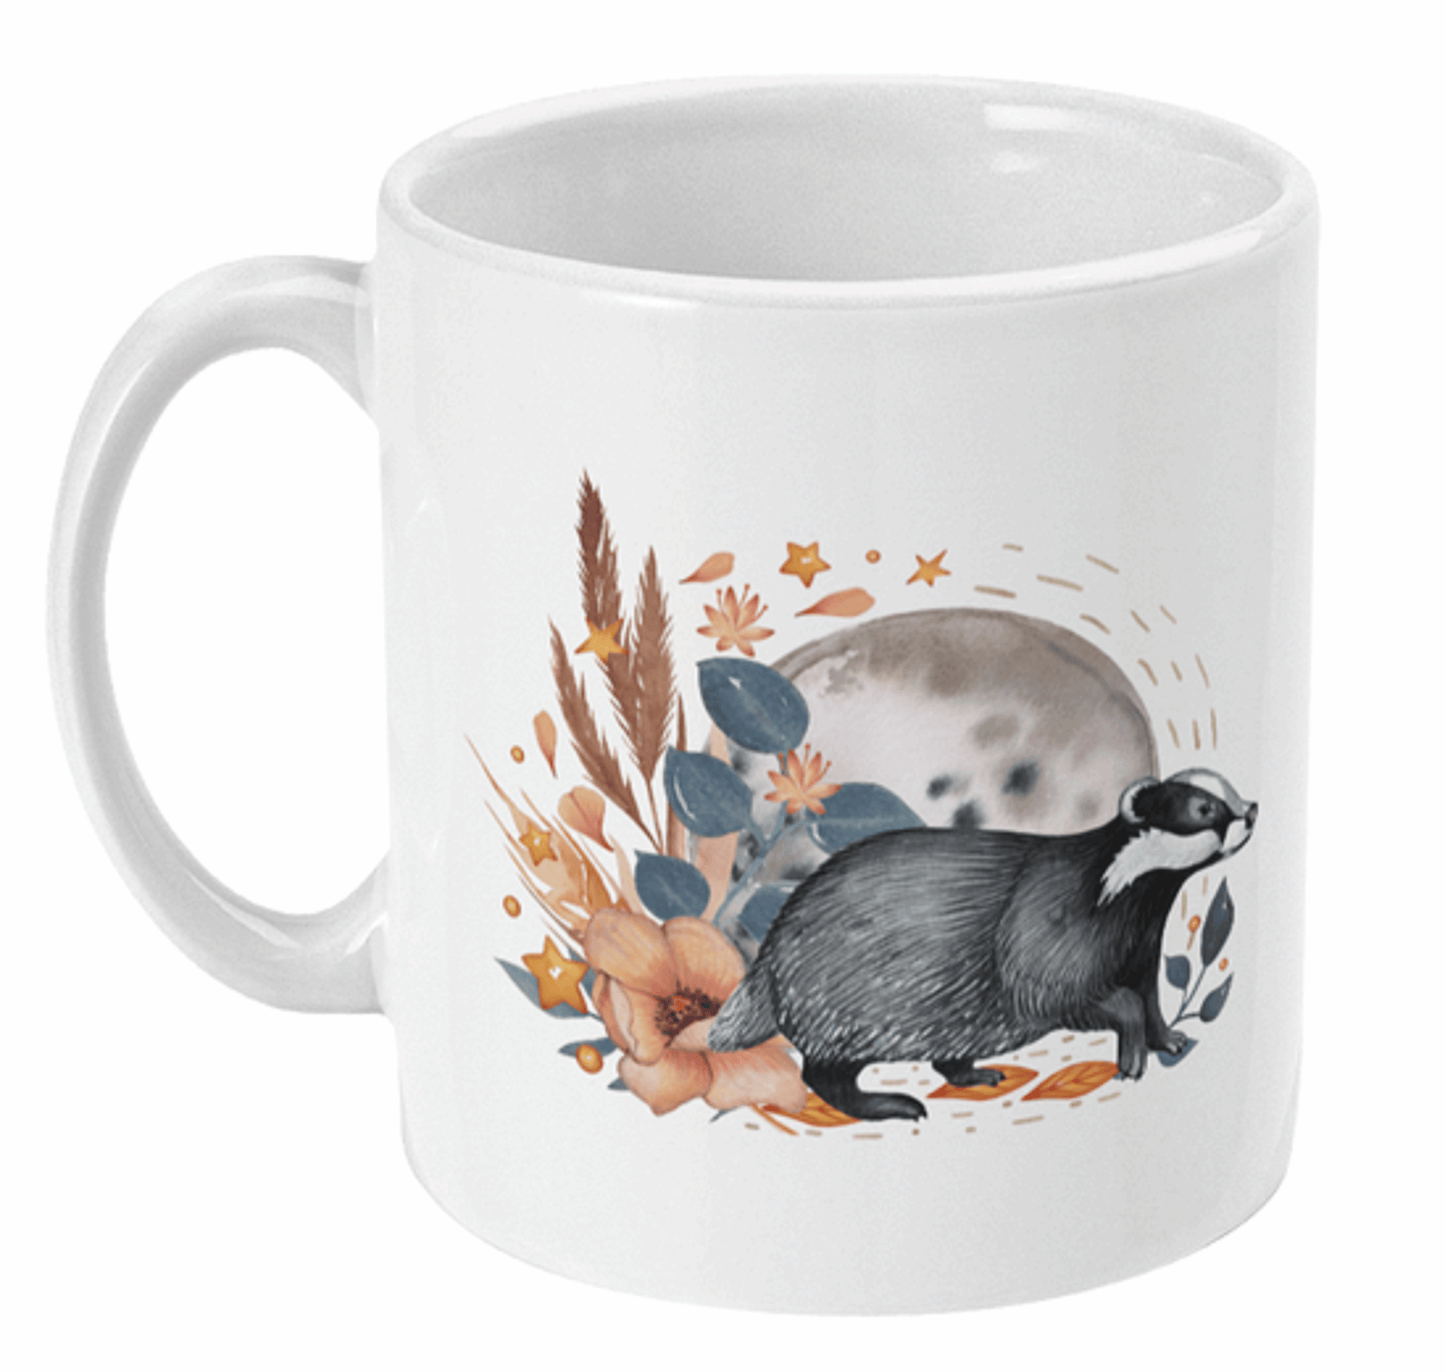  Beautiful Badger Moon Coffee Mug by Free Spirit Accessories sold by Free Spirit Accessories